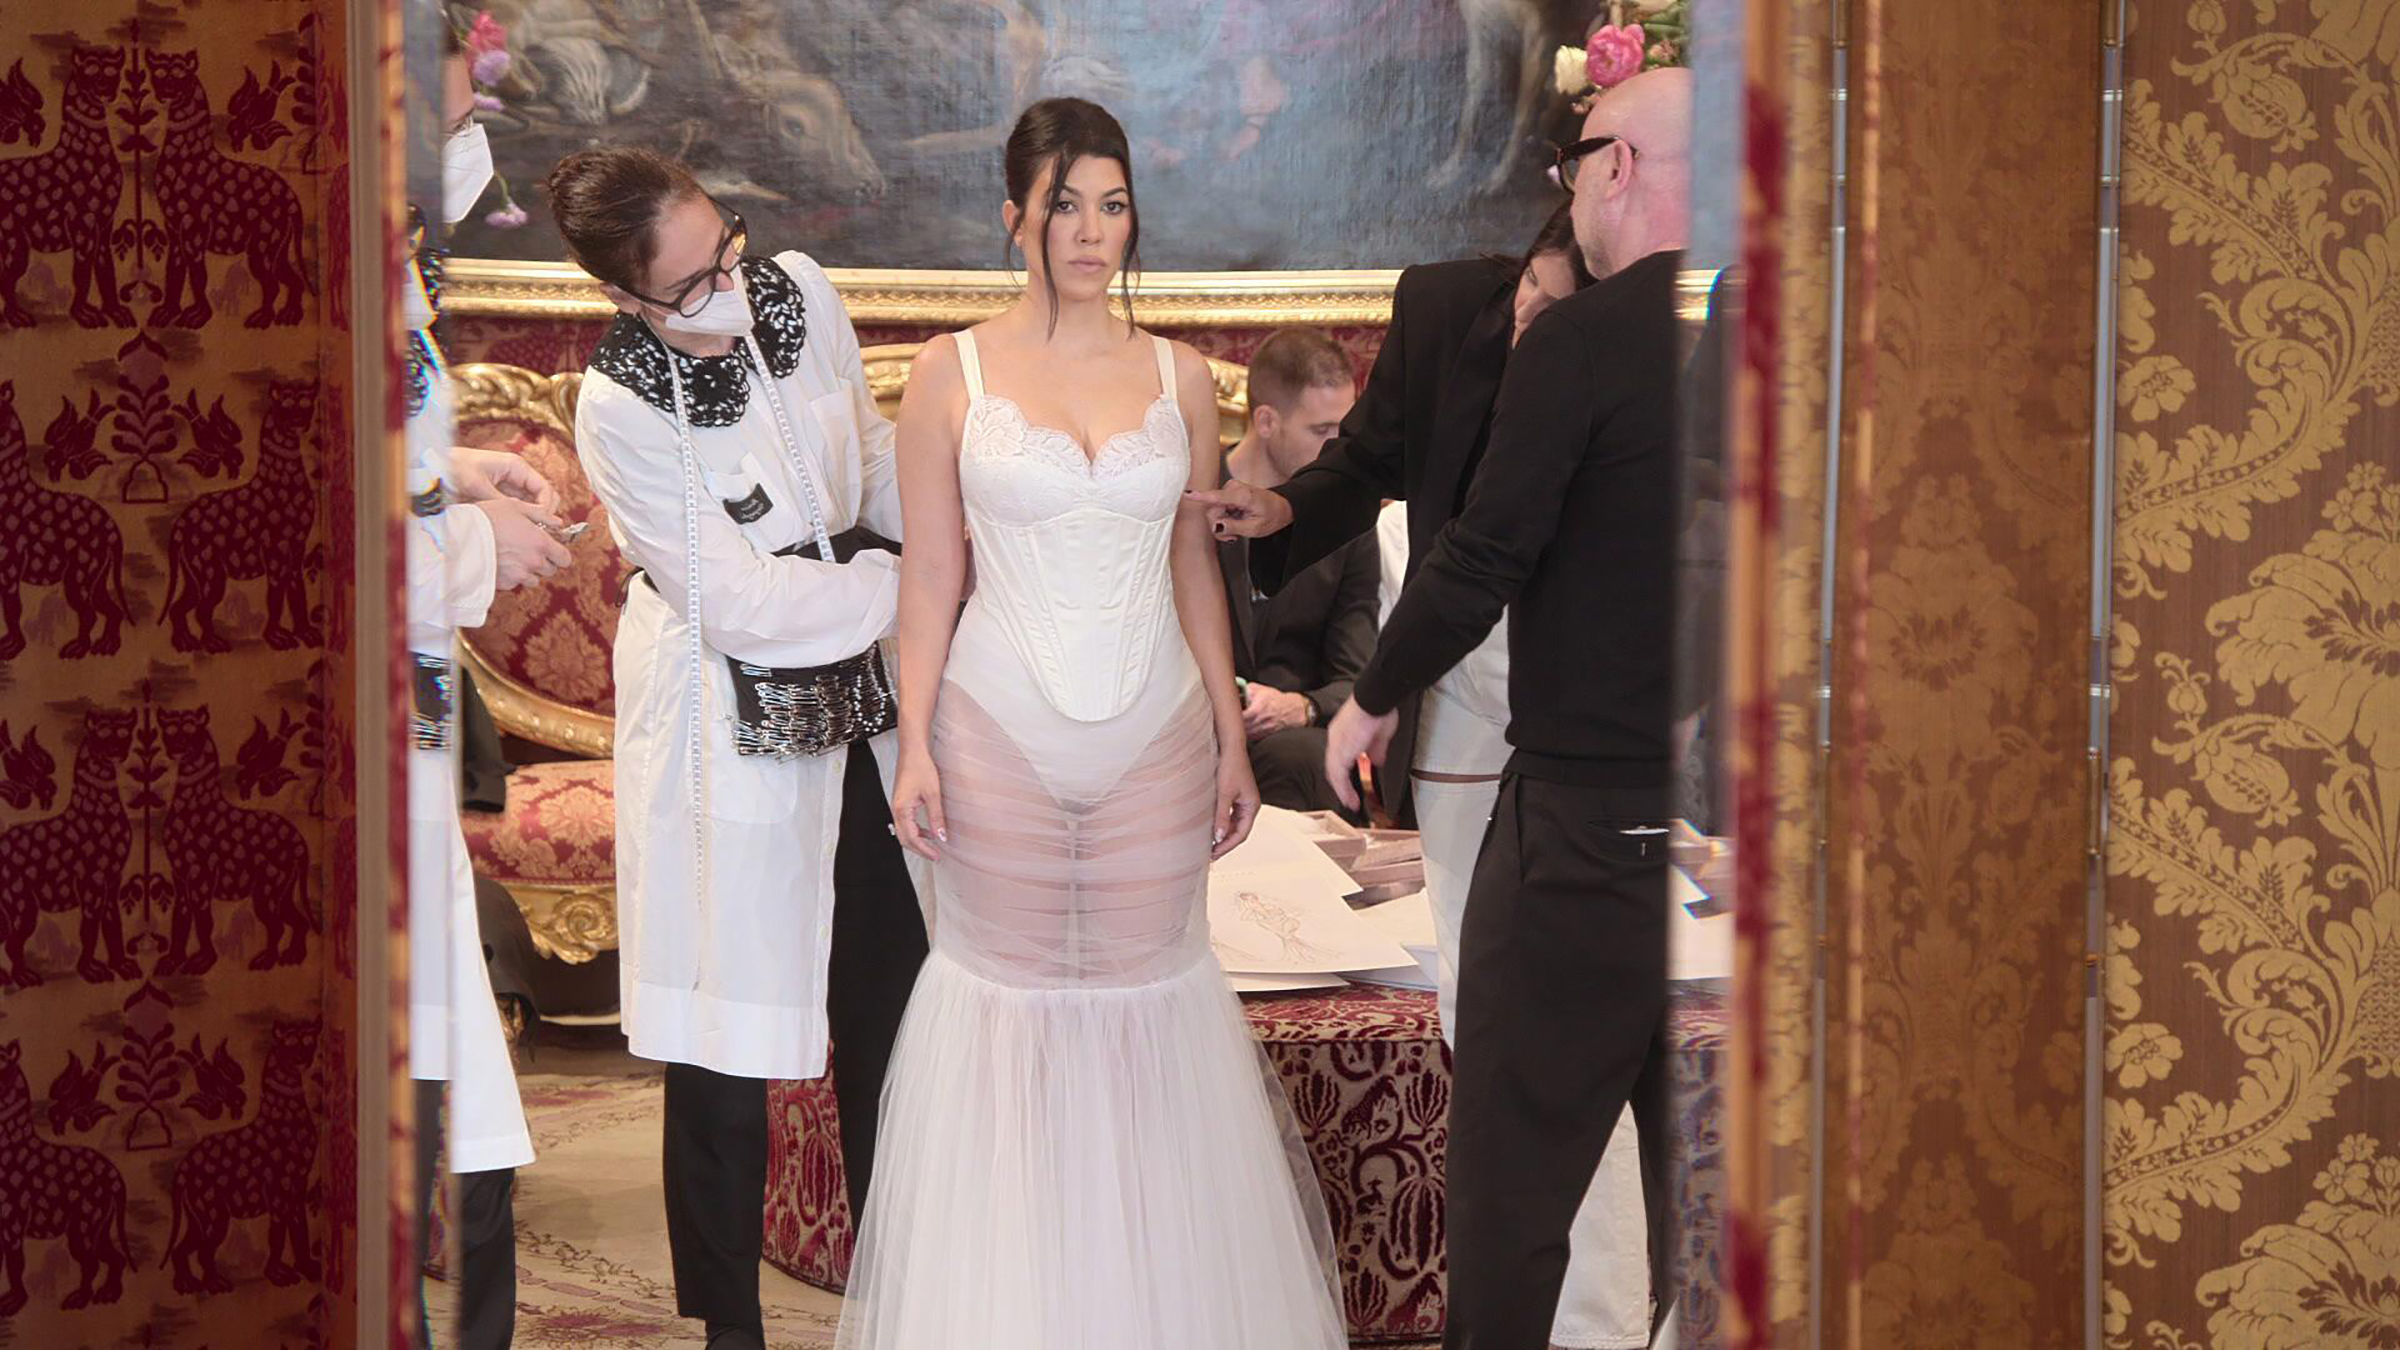 Kourtney Kardashian sees her wedding dress for the first time in Milan. (Hulu)